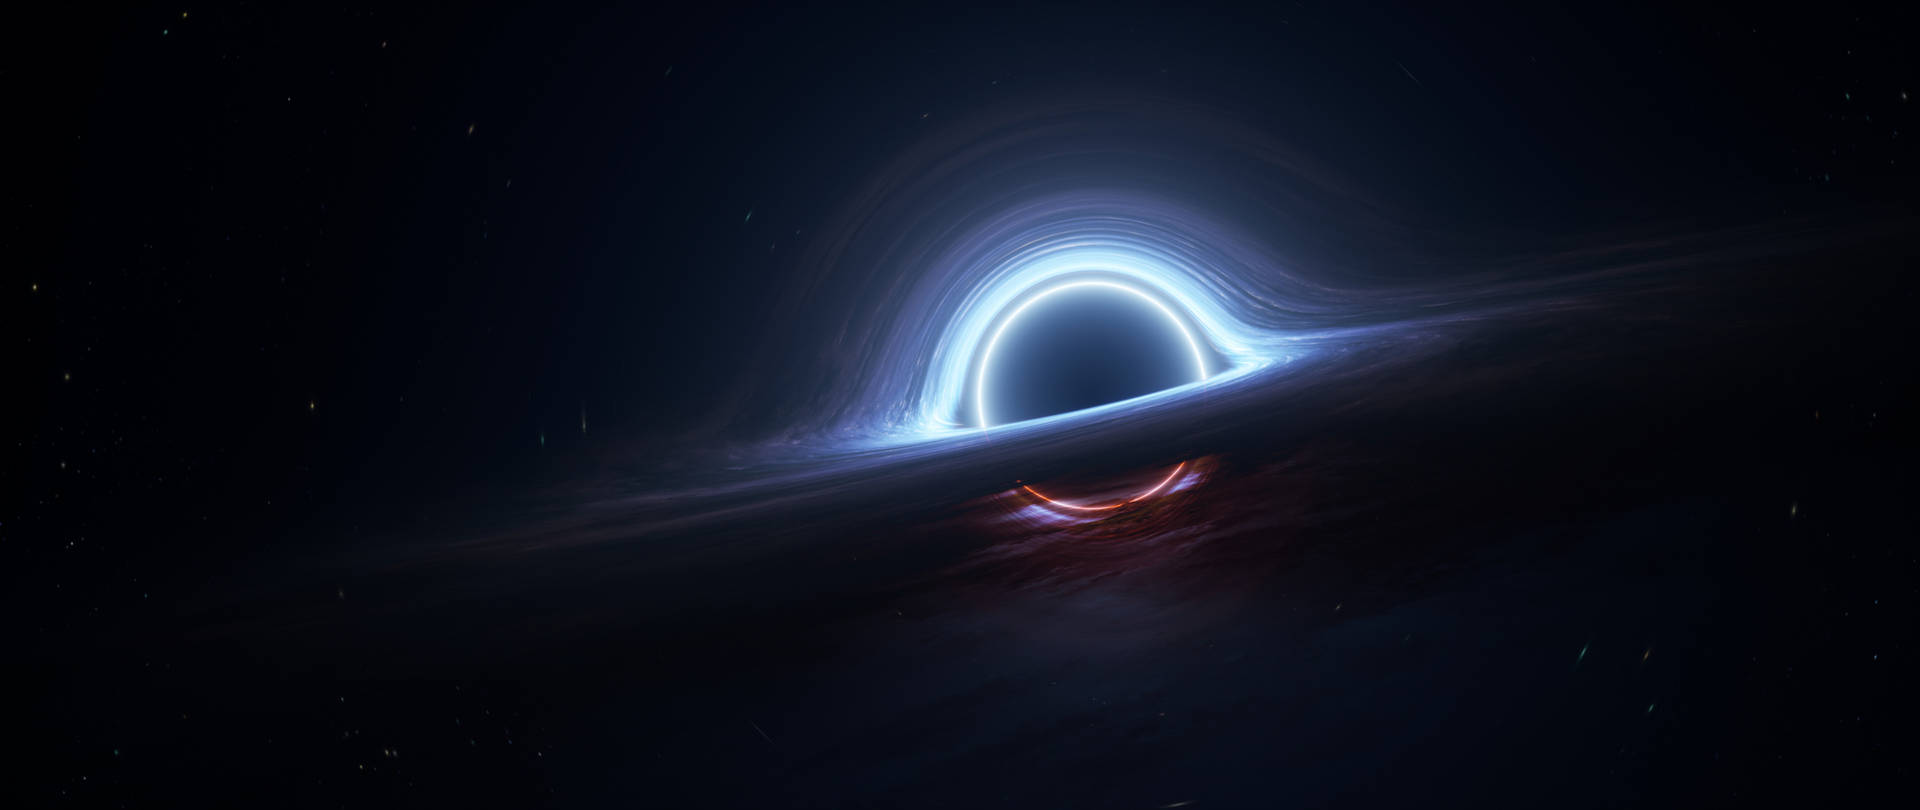 4k Black Hole Blue Event Horizon 59jd29jf5a68v6jt 